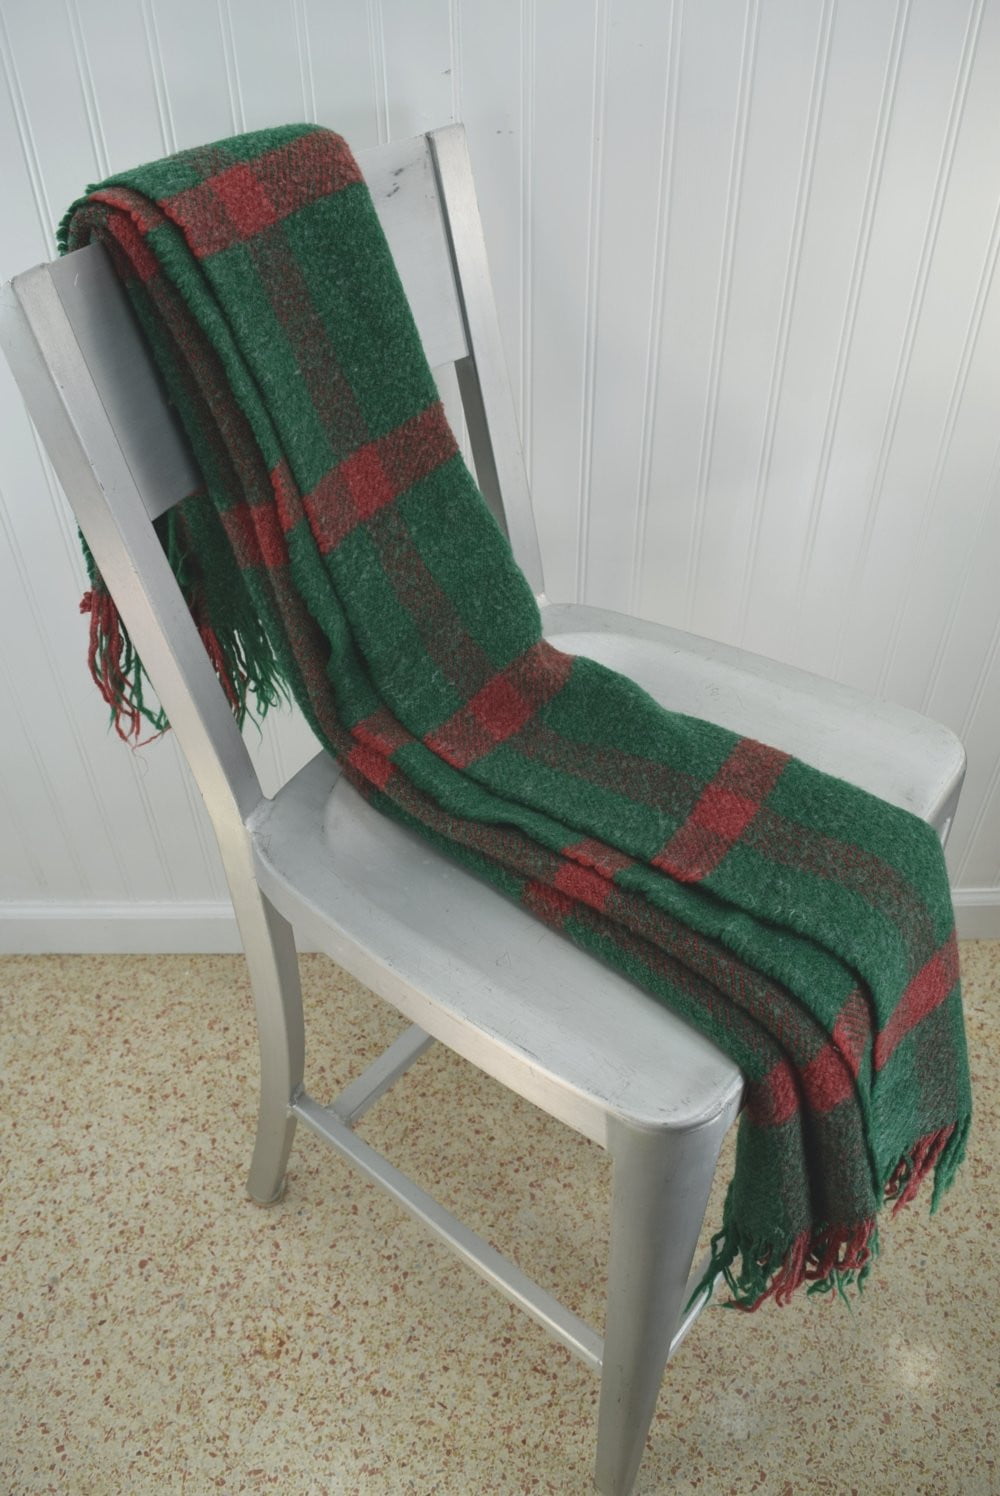 USA Wool Acrylic Throw Afghan "YULETIDE" Green Rosie Red christmas